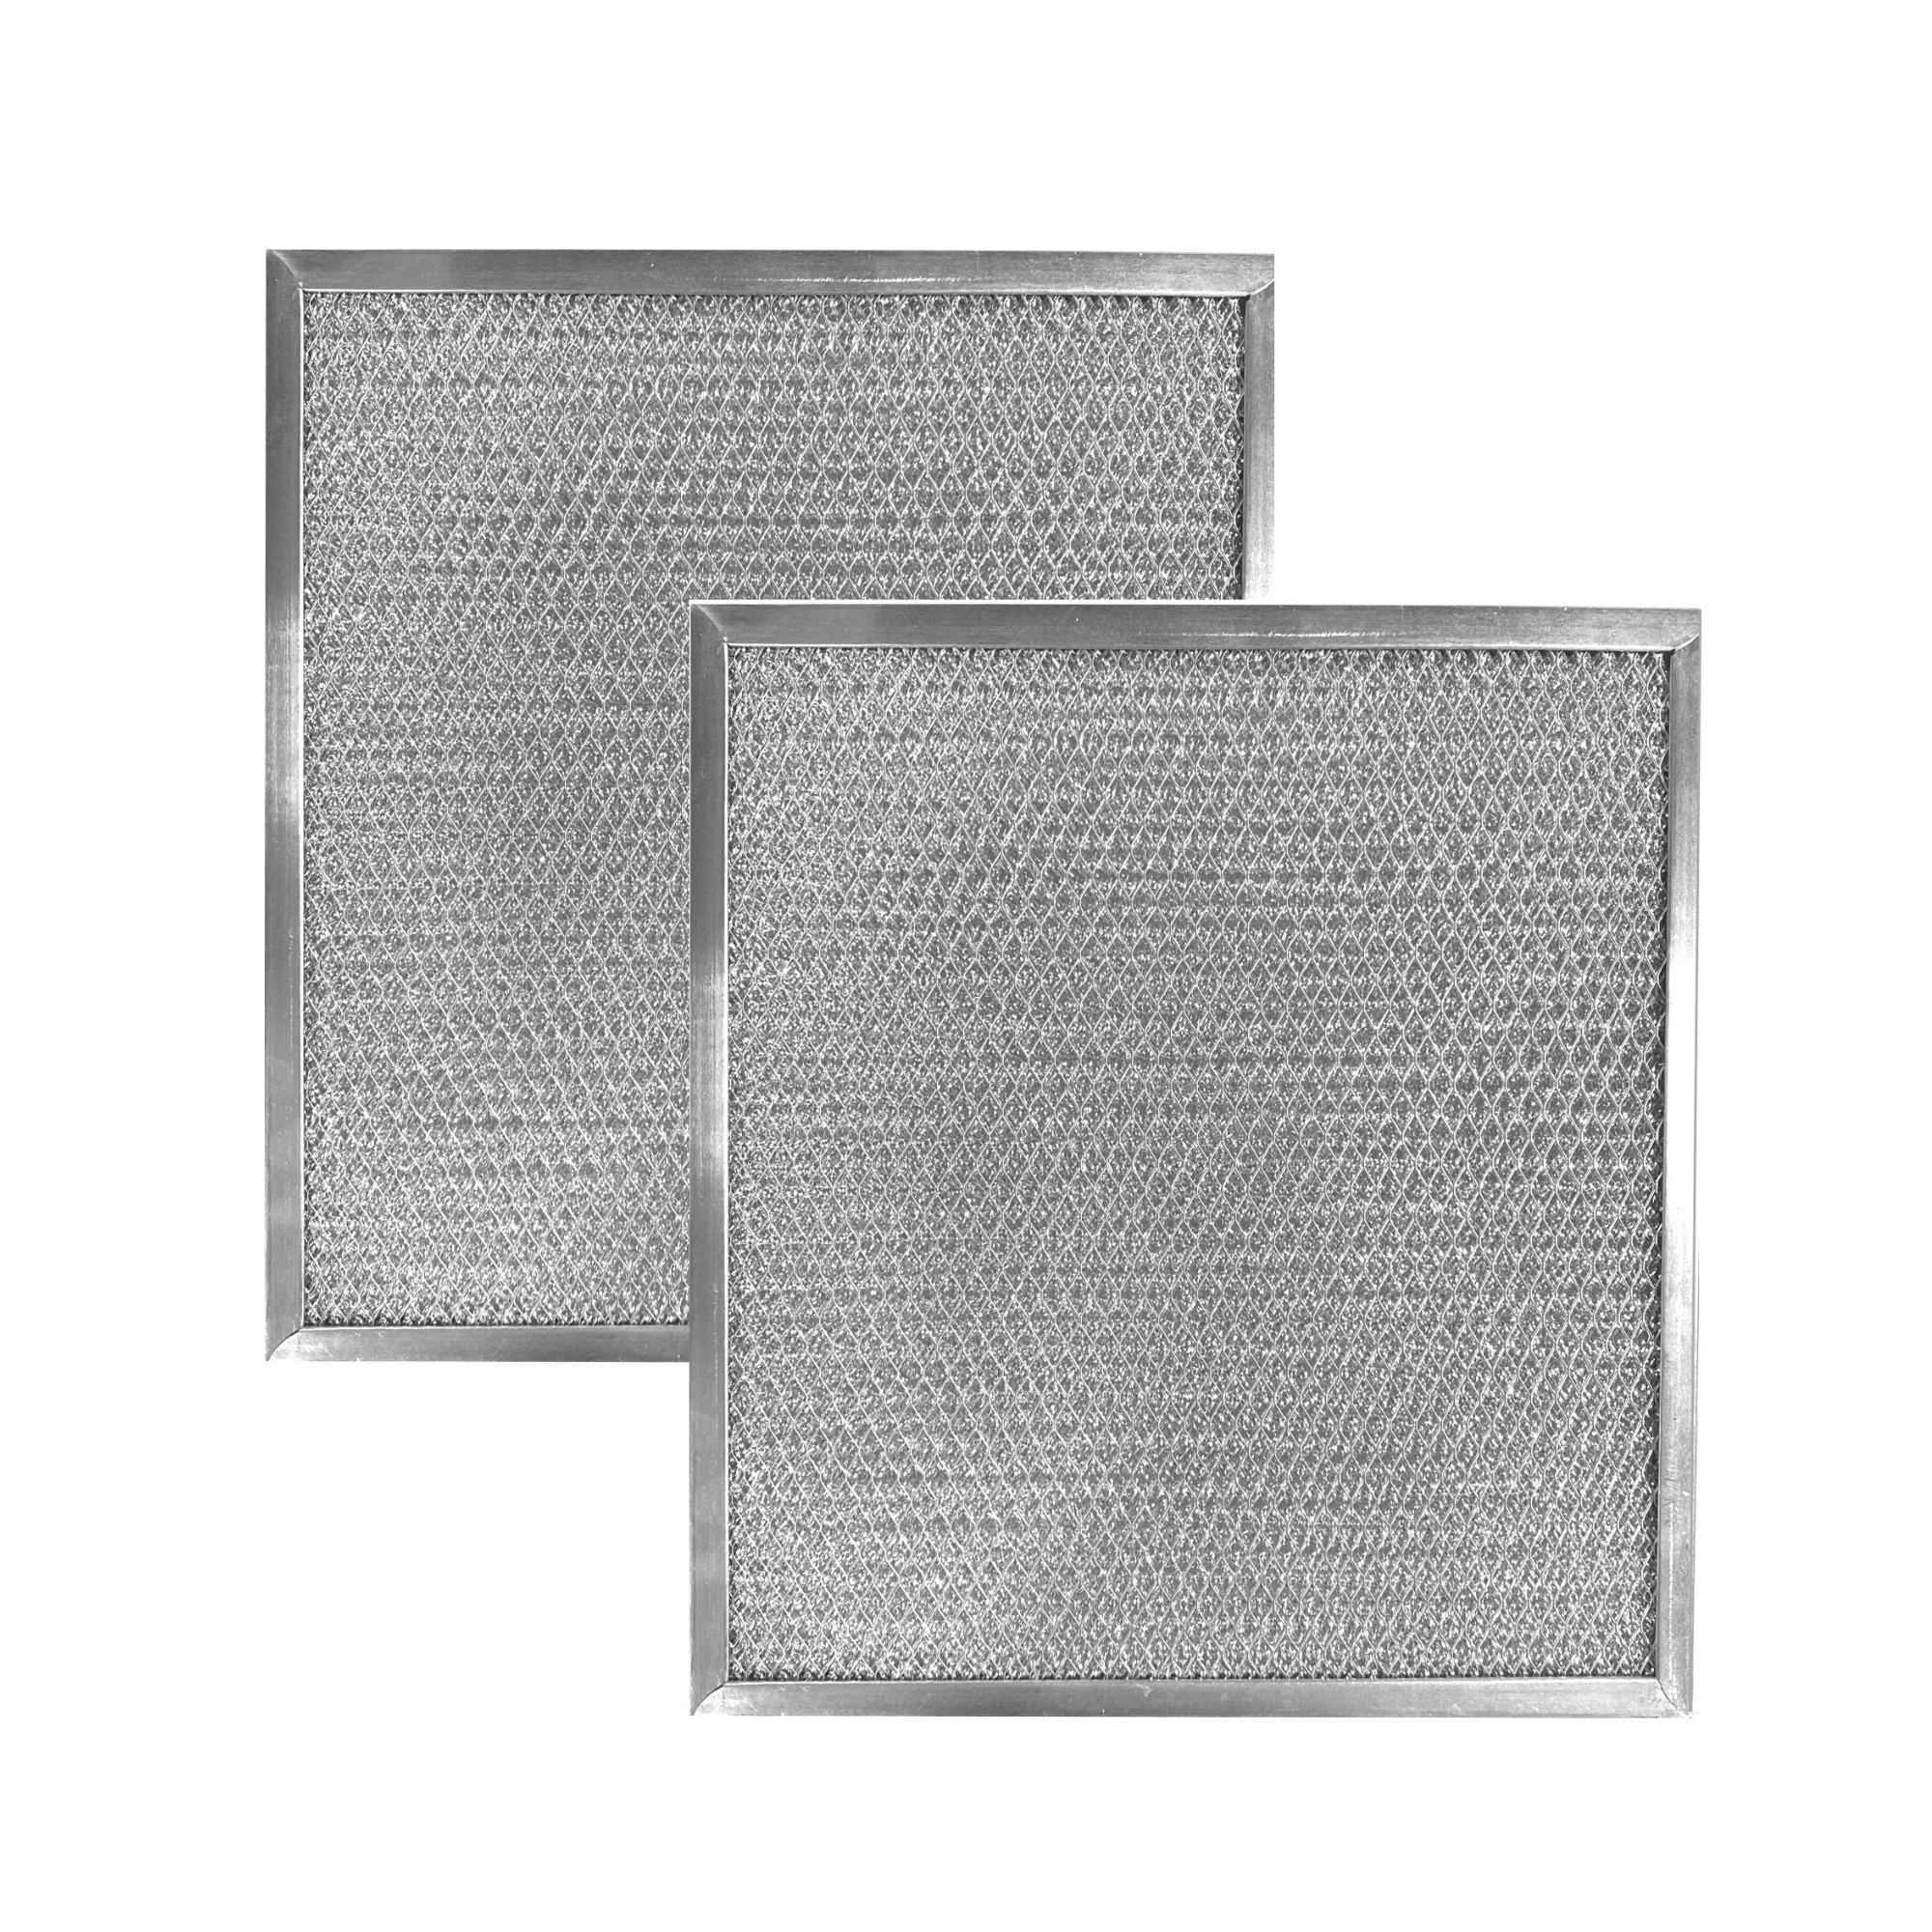 2-Pack Air Filter Factory 10-1/2 x 10-1/2 x 3/8 Aluminum Mesh